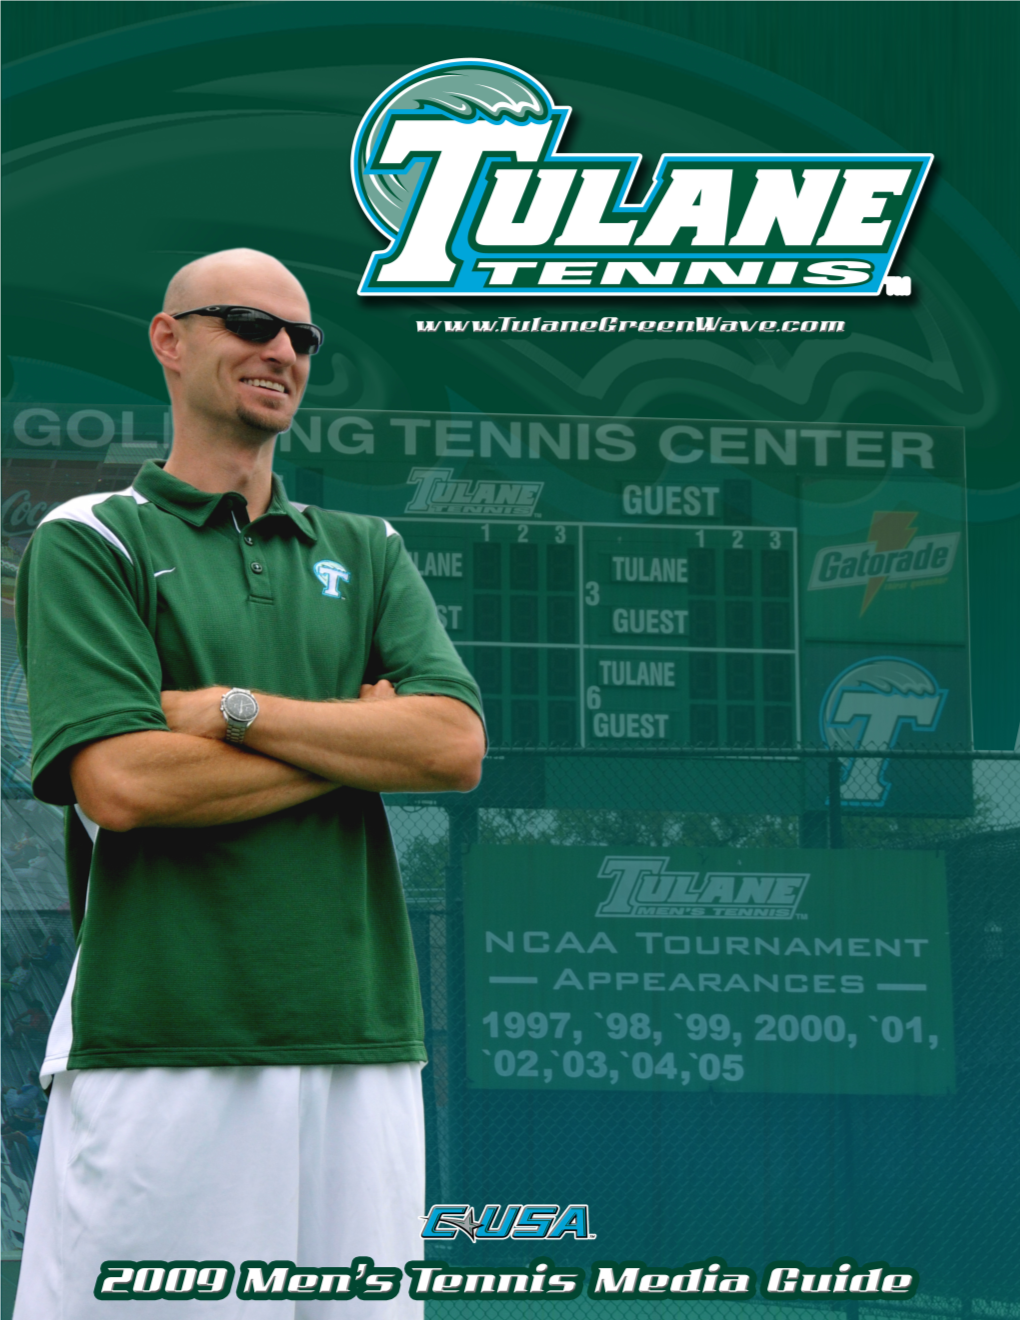 Tulane's Men's Tennis Success on the Court